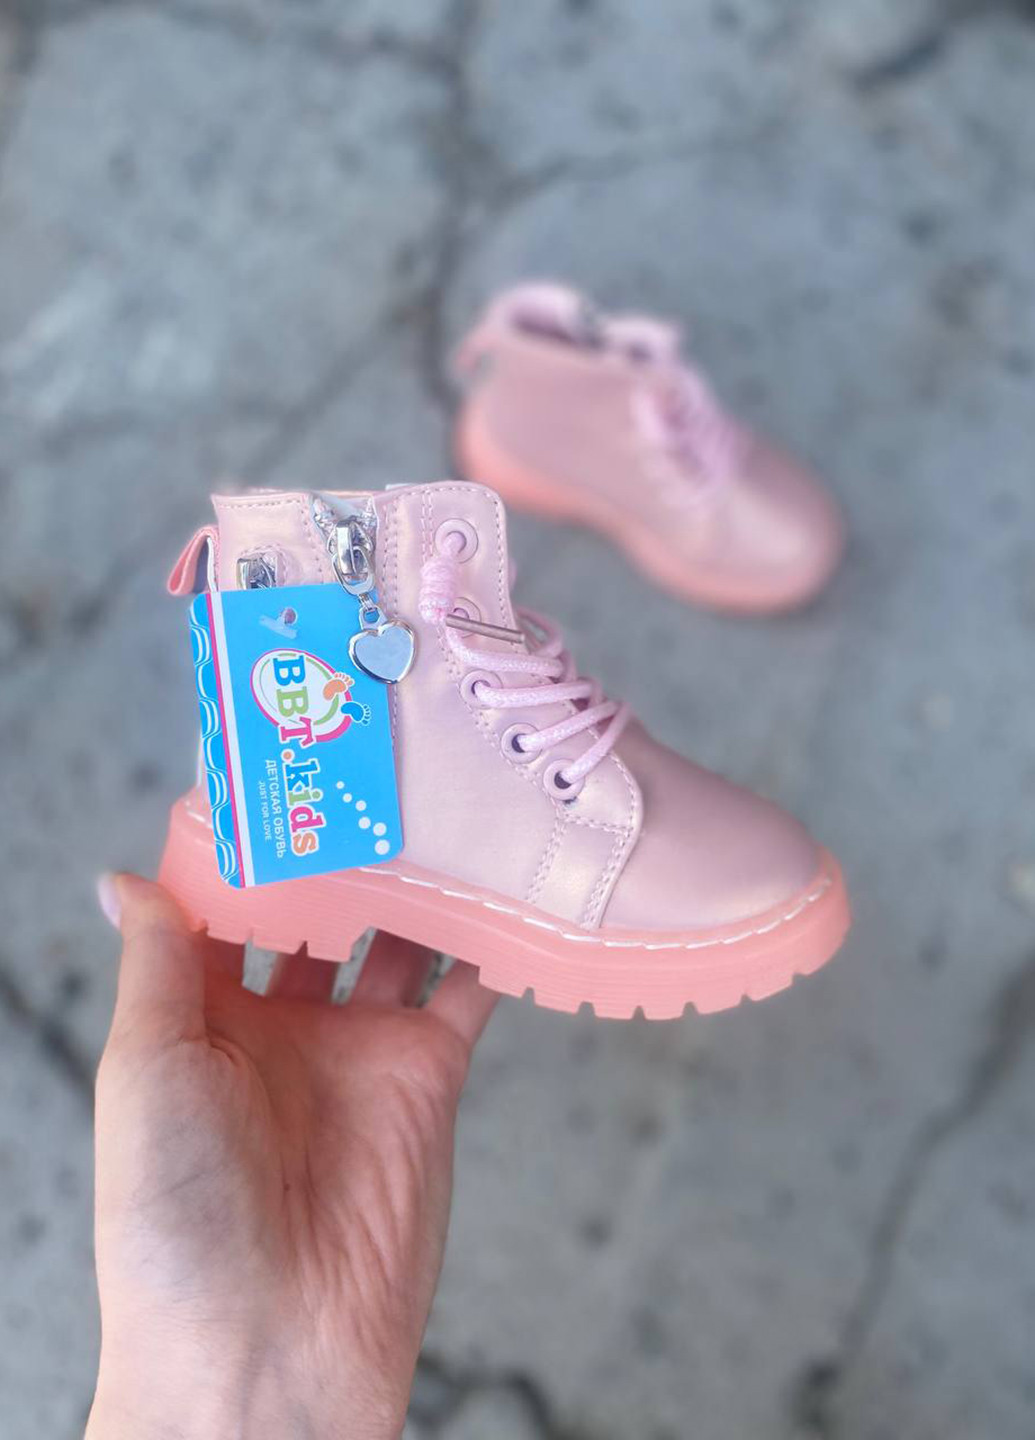 Розовые кэжуал осенние ботинки BBT Kids